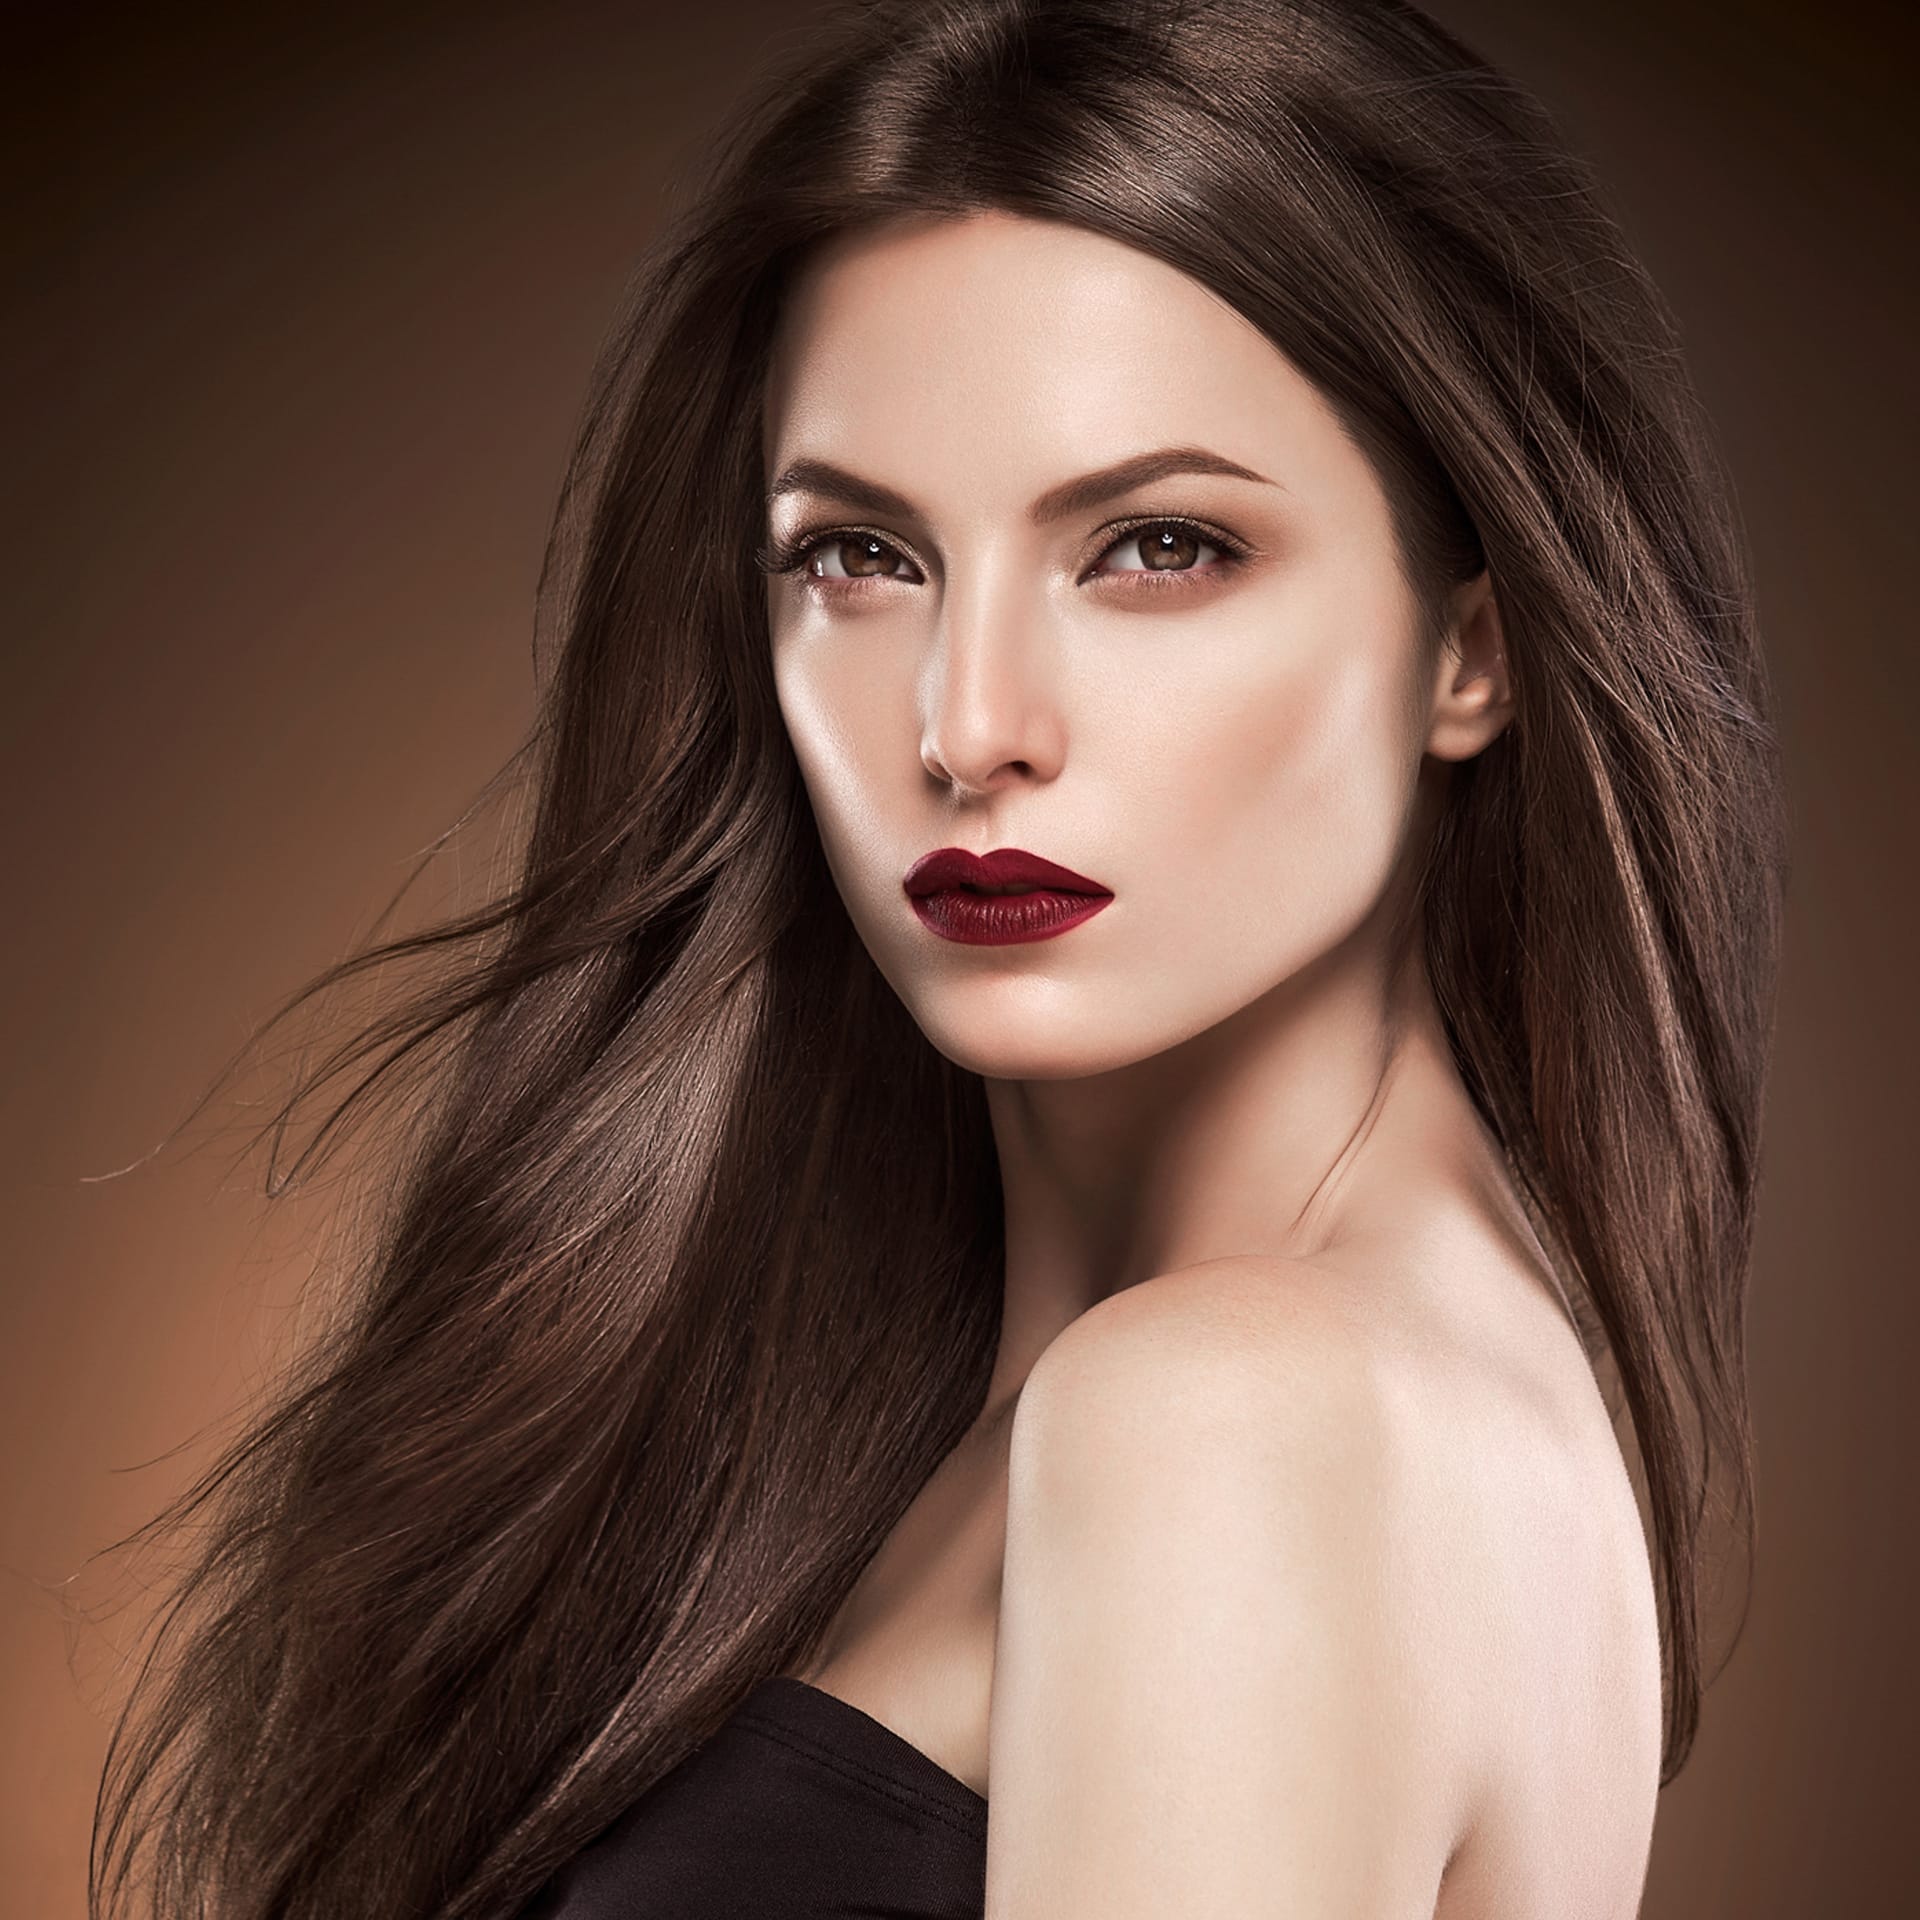 Beautiful manicure nails model red lipstick brown background evening makeup portrait studio shot